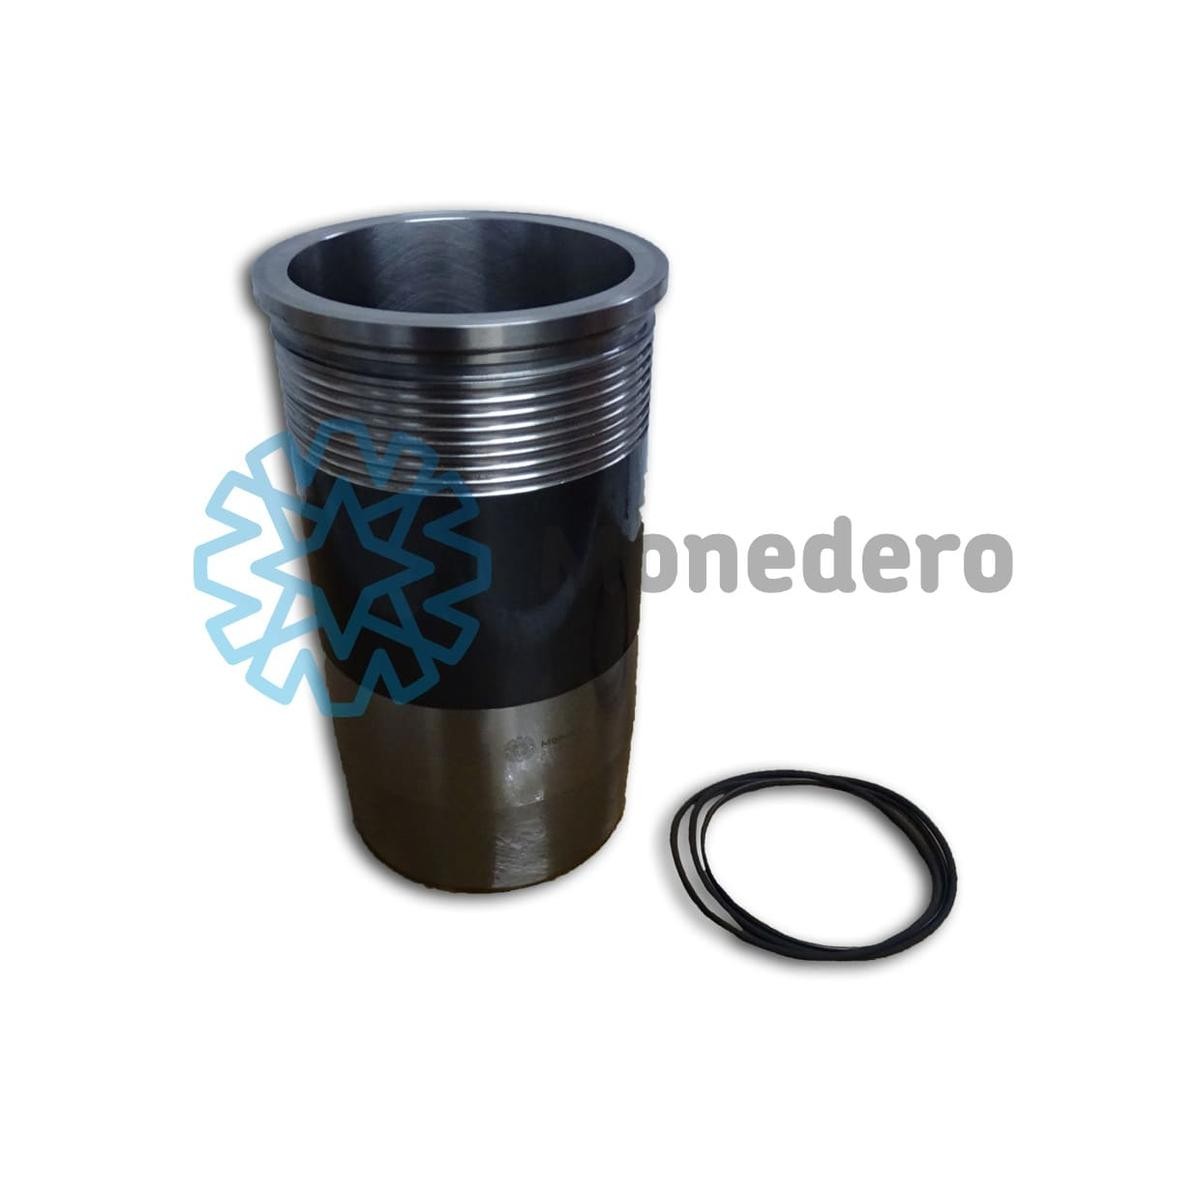 MONEDERO 20011300002 Cylinder Sleeve 51012010406